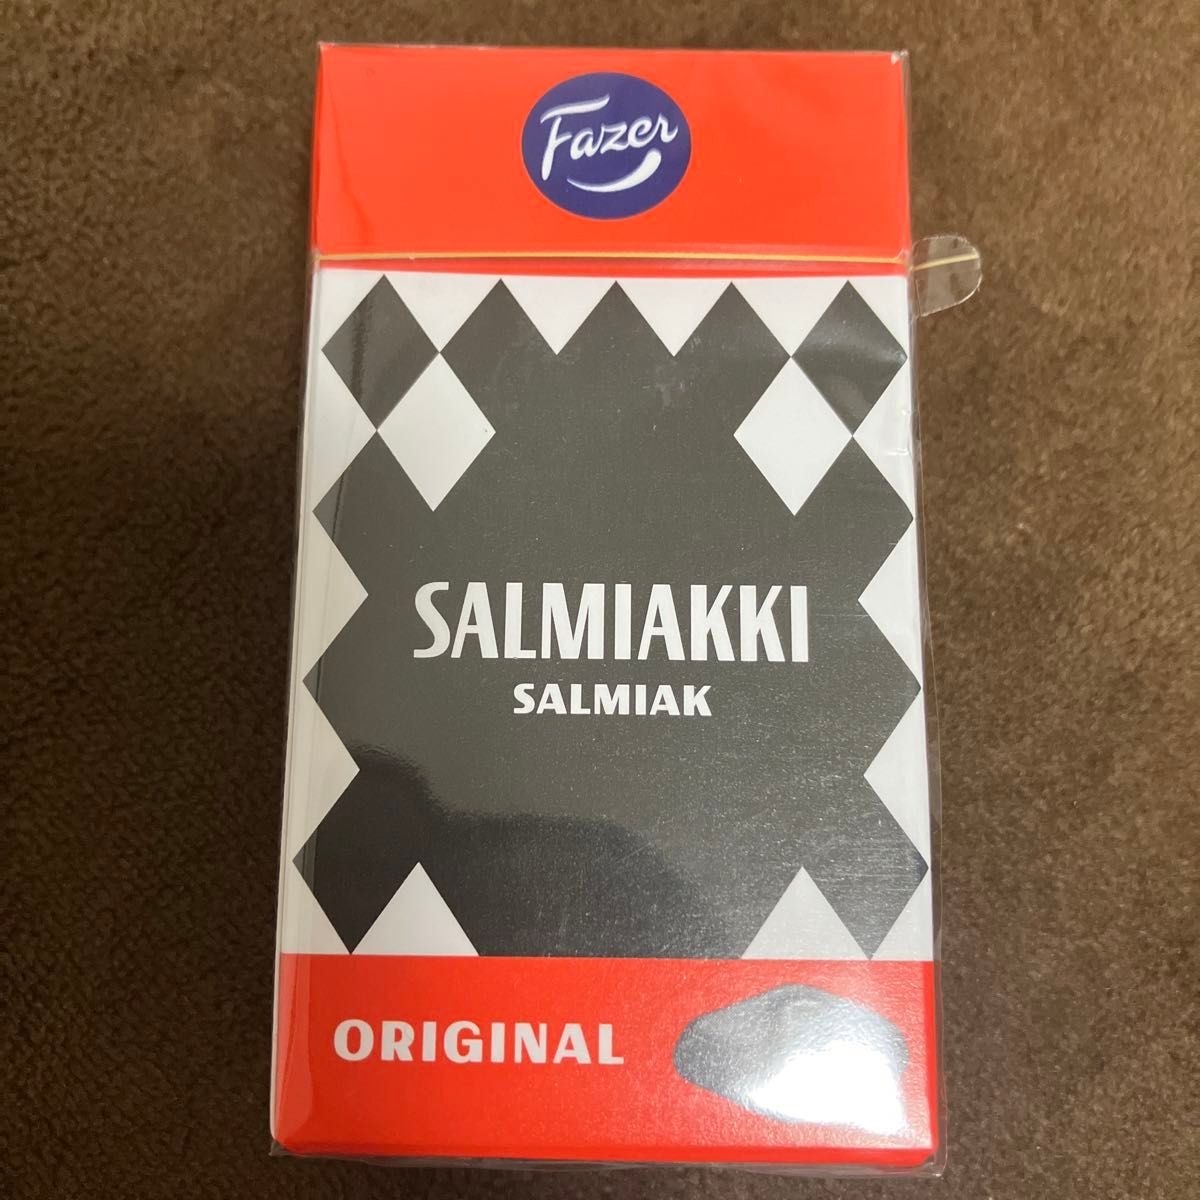 Fazer サルミアッキ SALMIAKKI 40g x 1箱 フィンランド産 